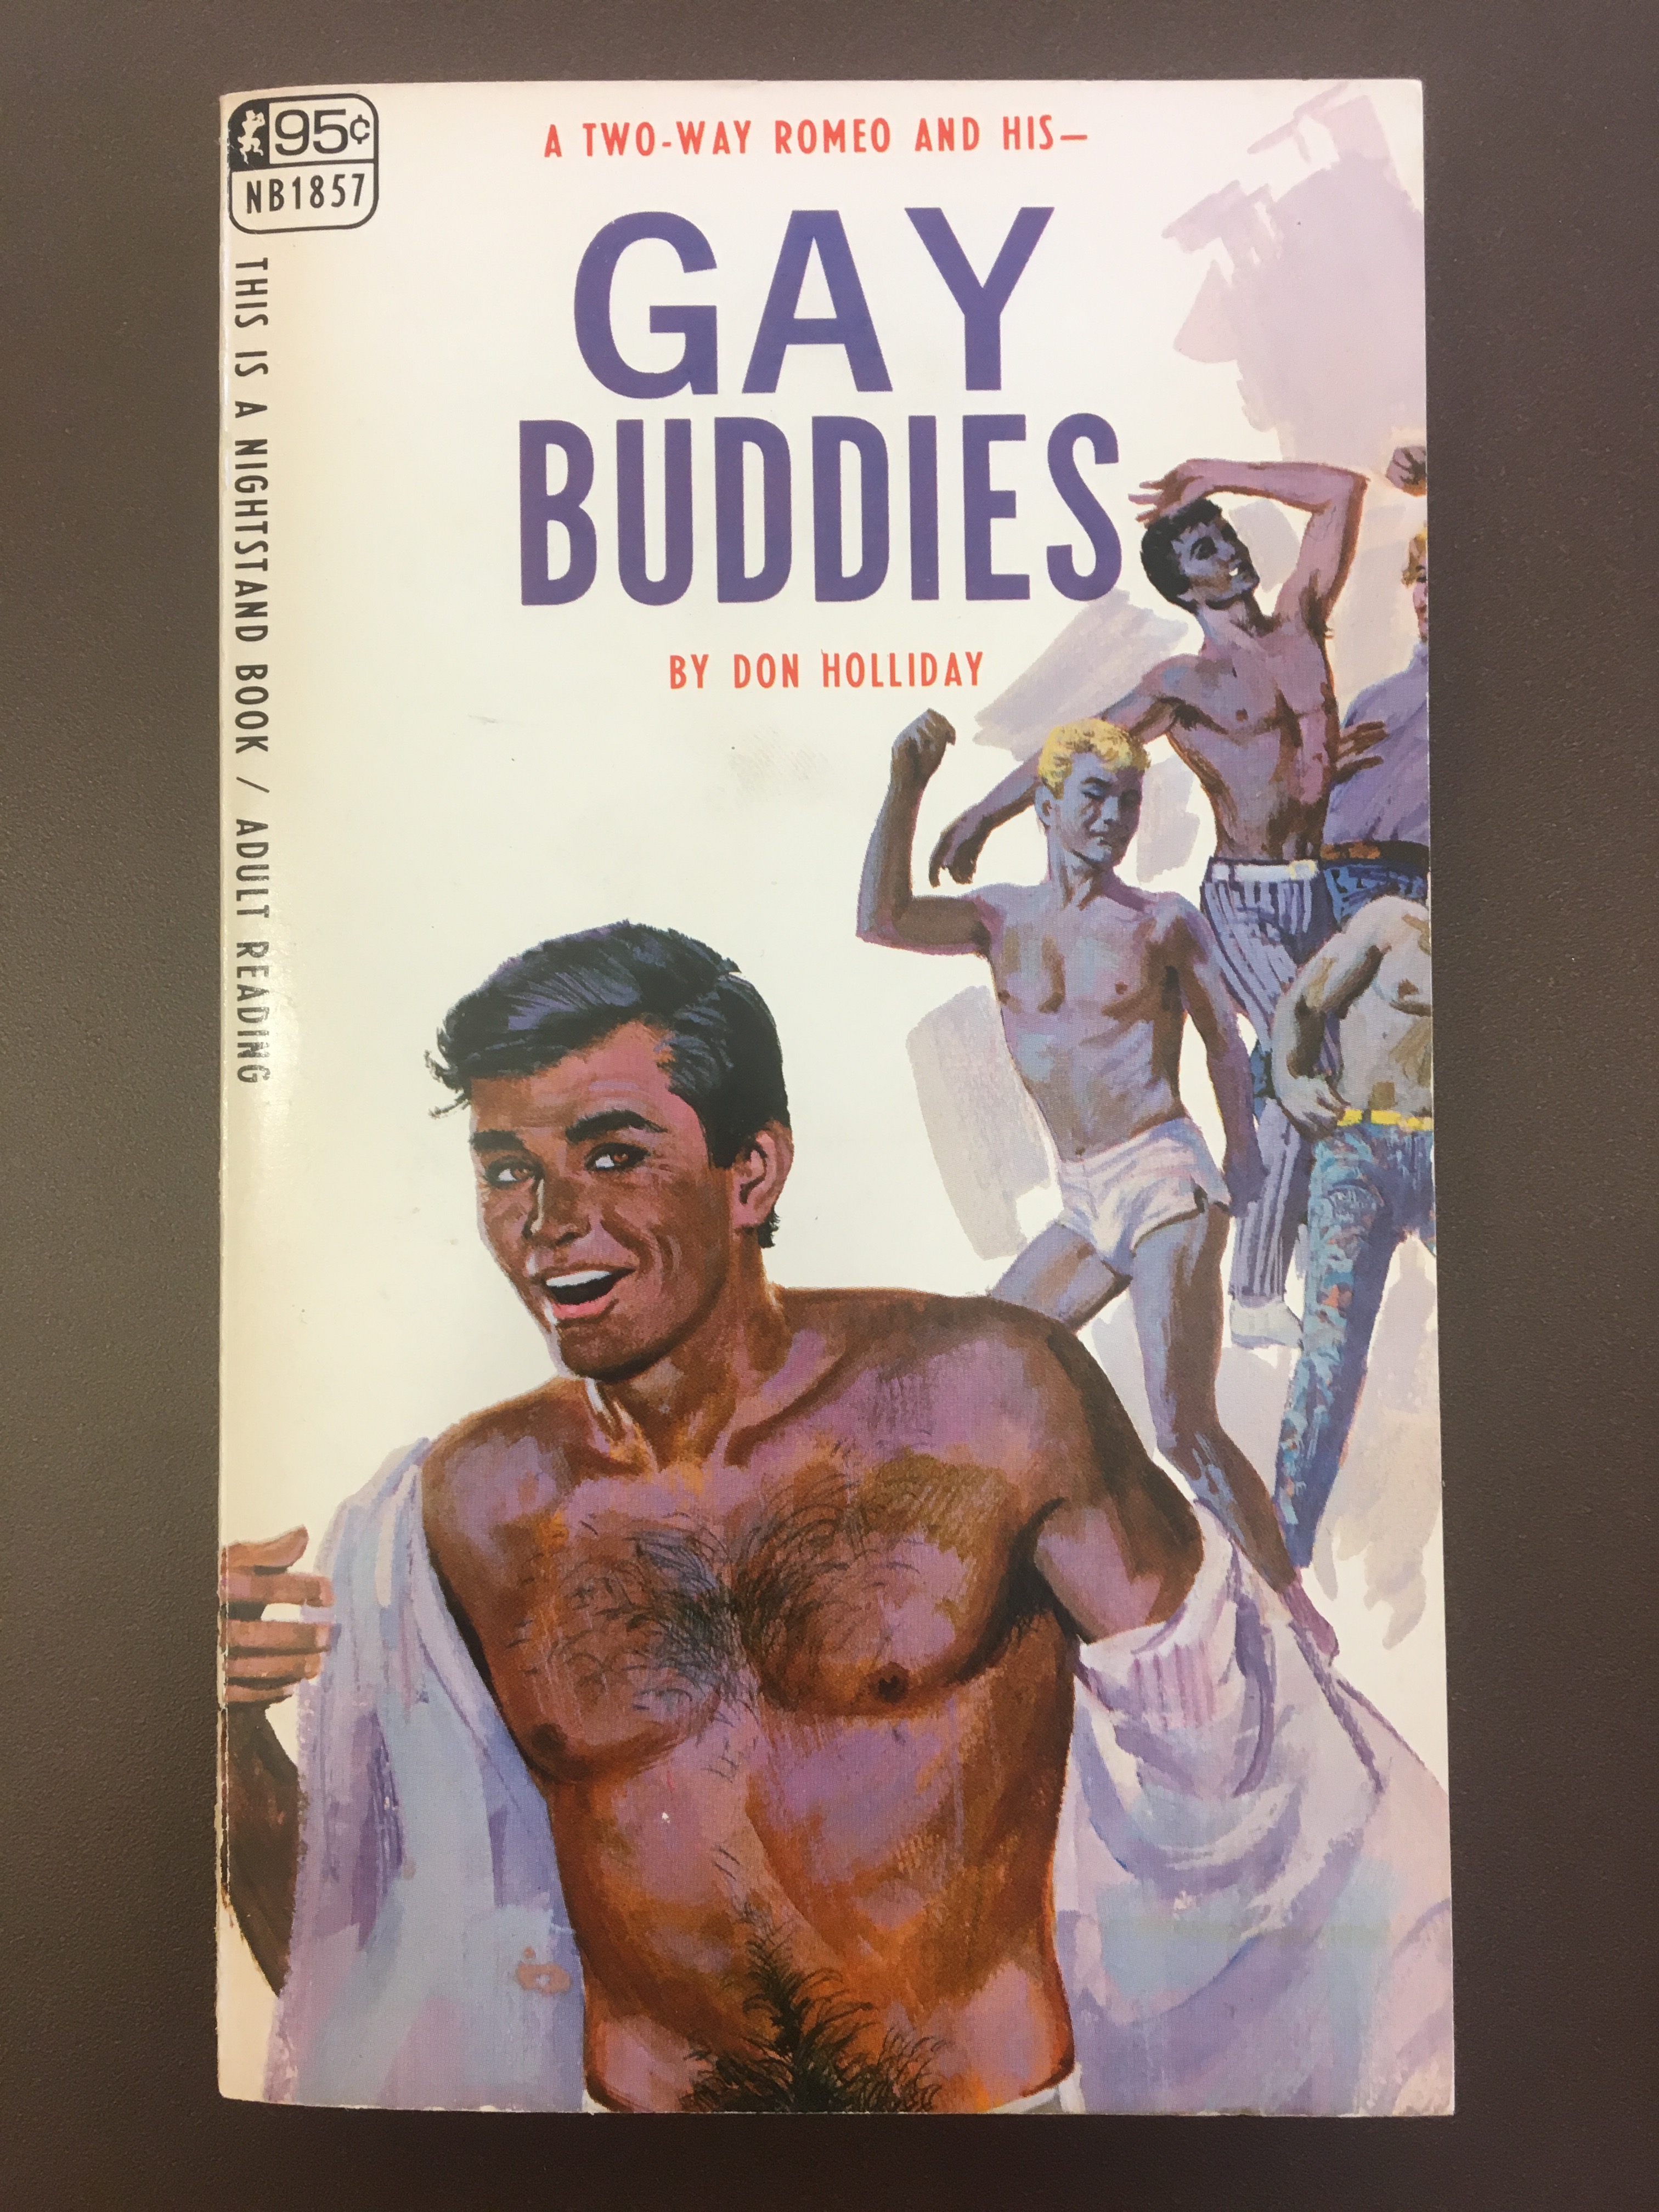 Gay erotic novels